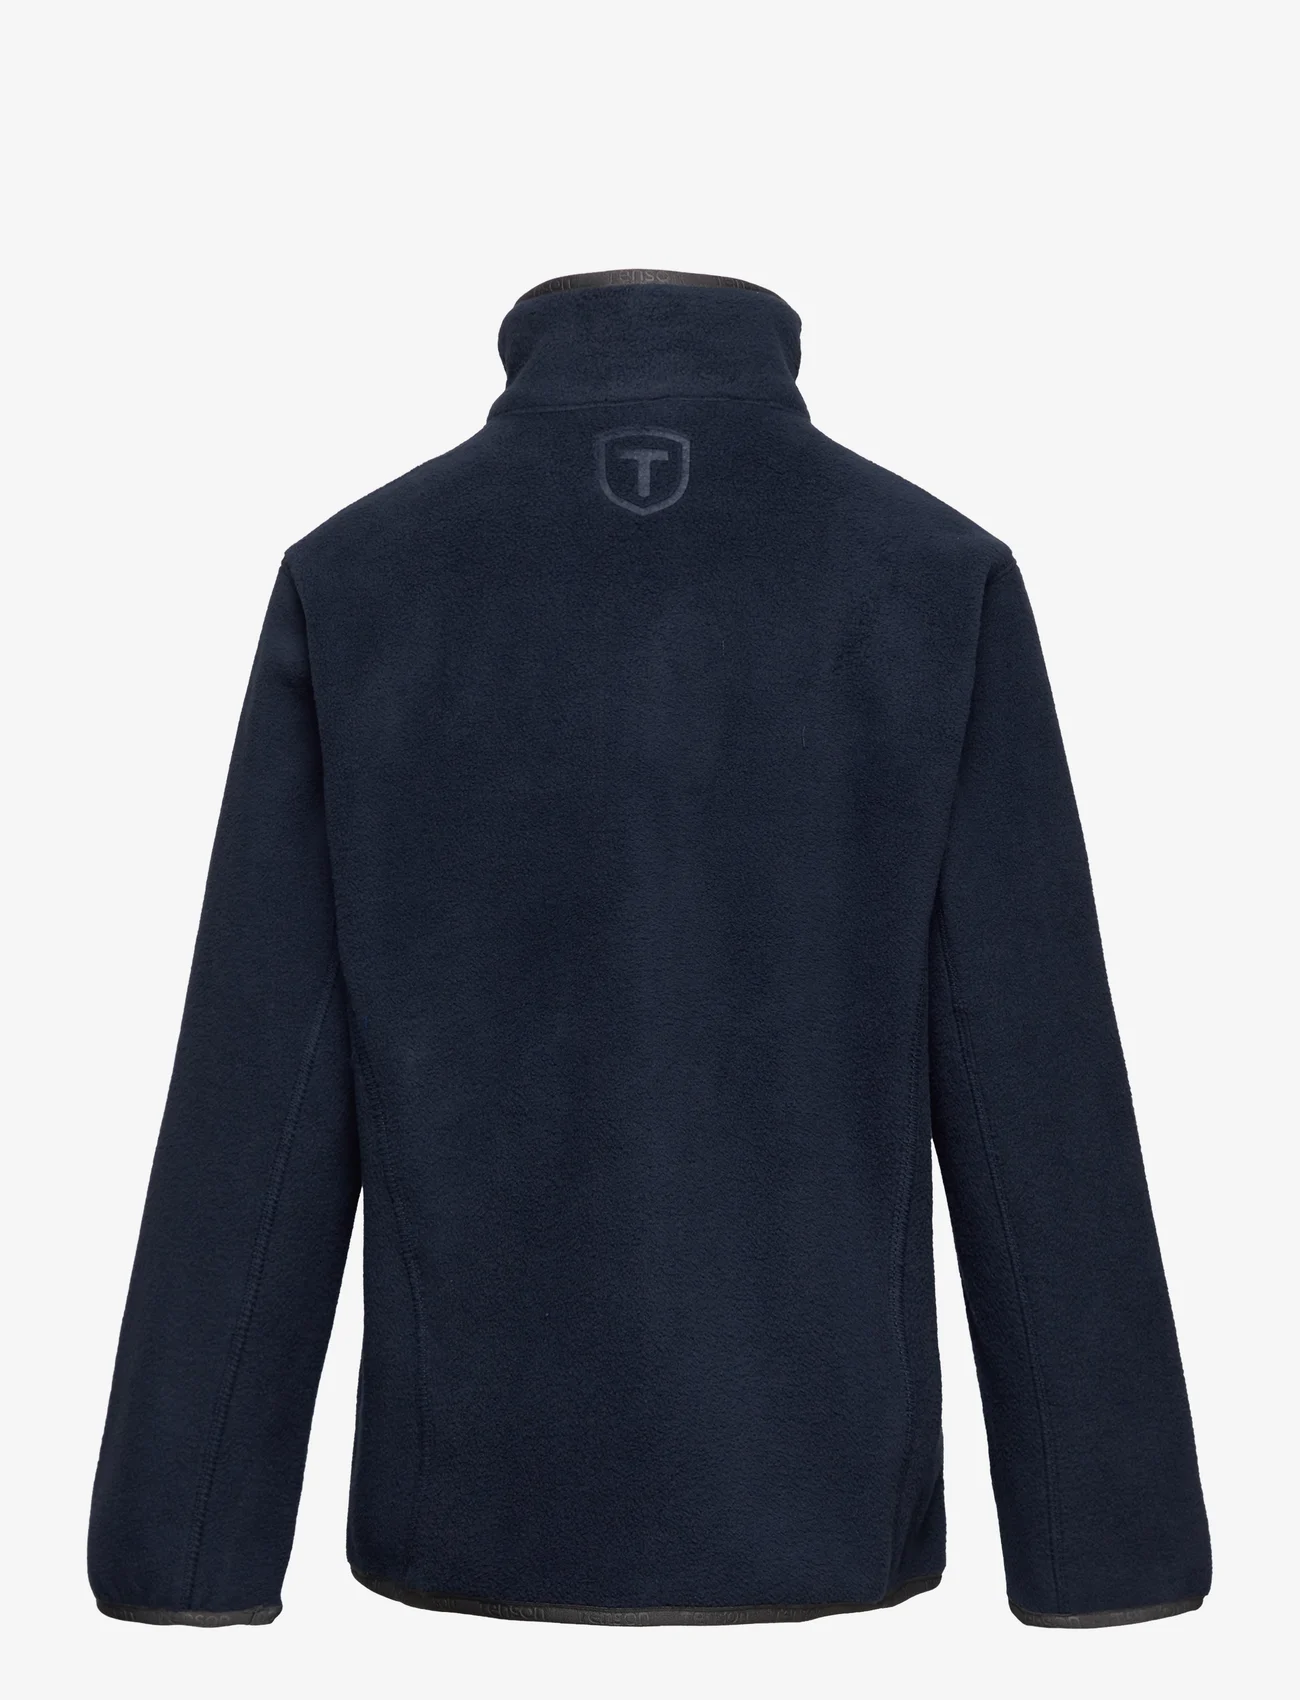 Tenson - Miller Fleece JR - fleece jacket - navy blazer - 1